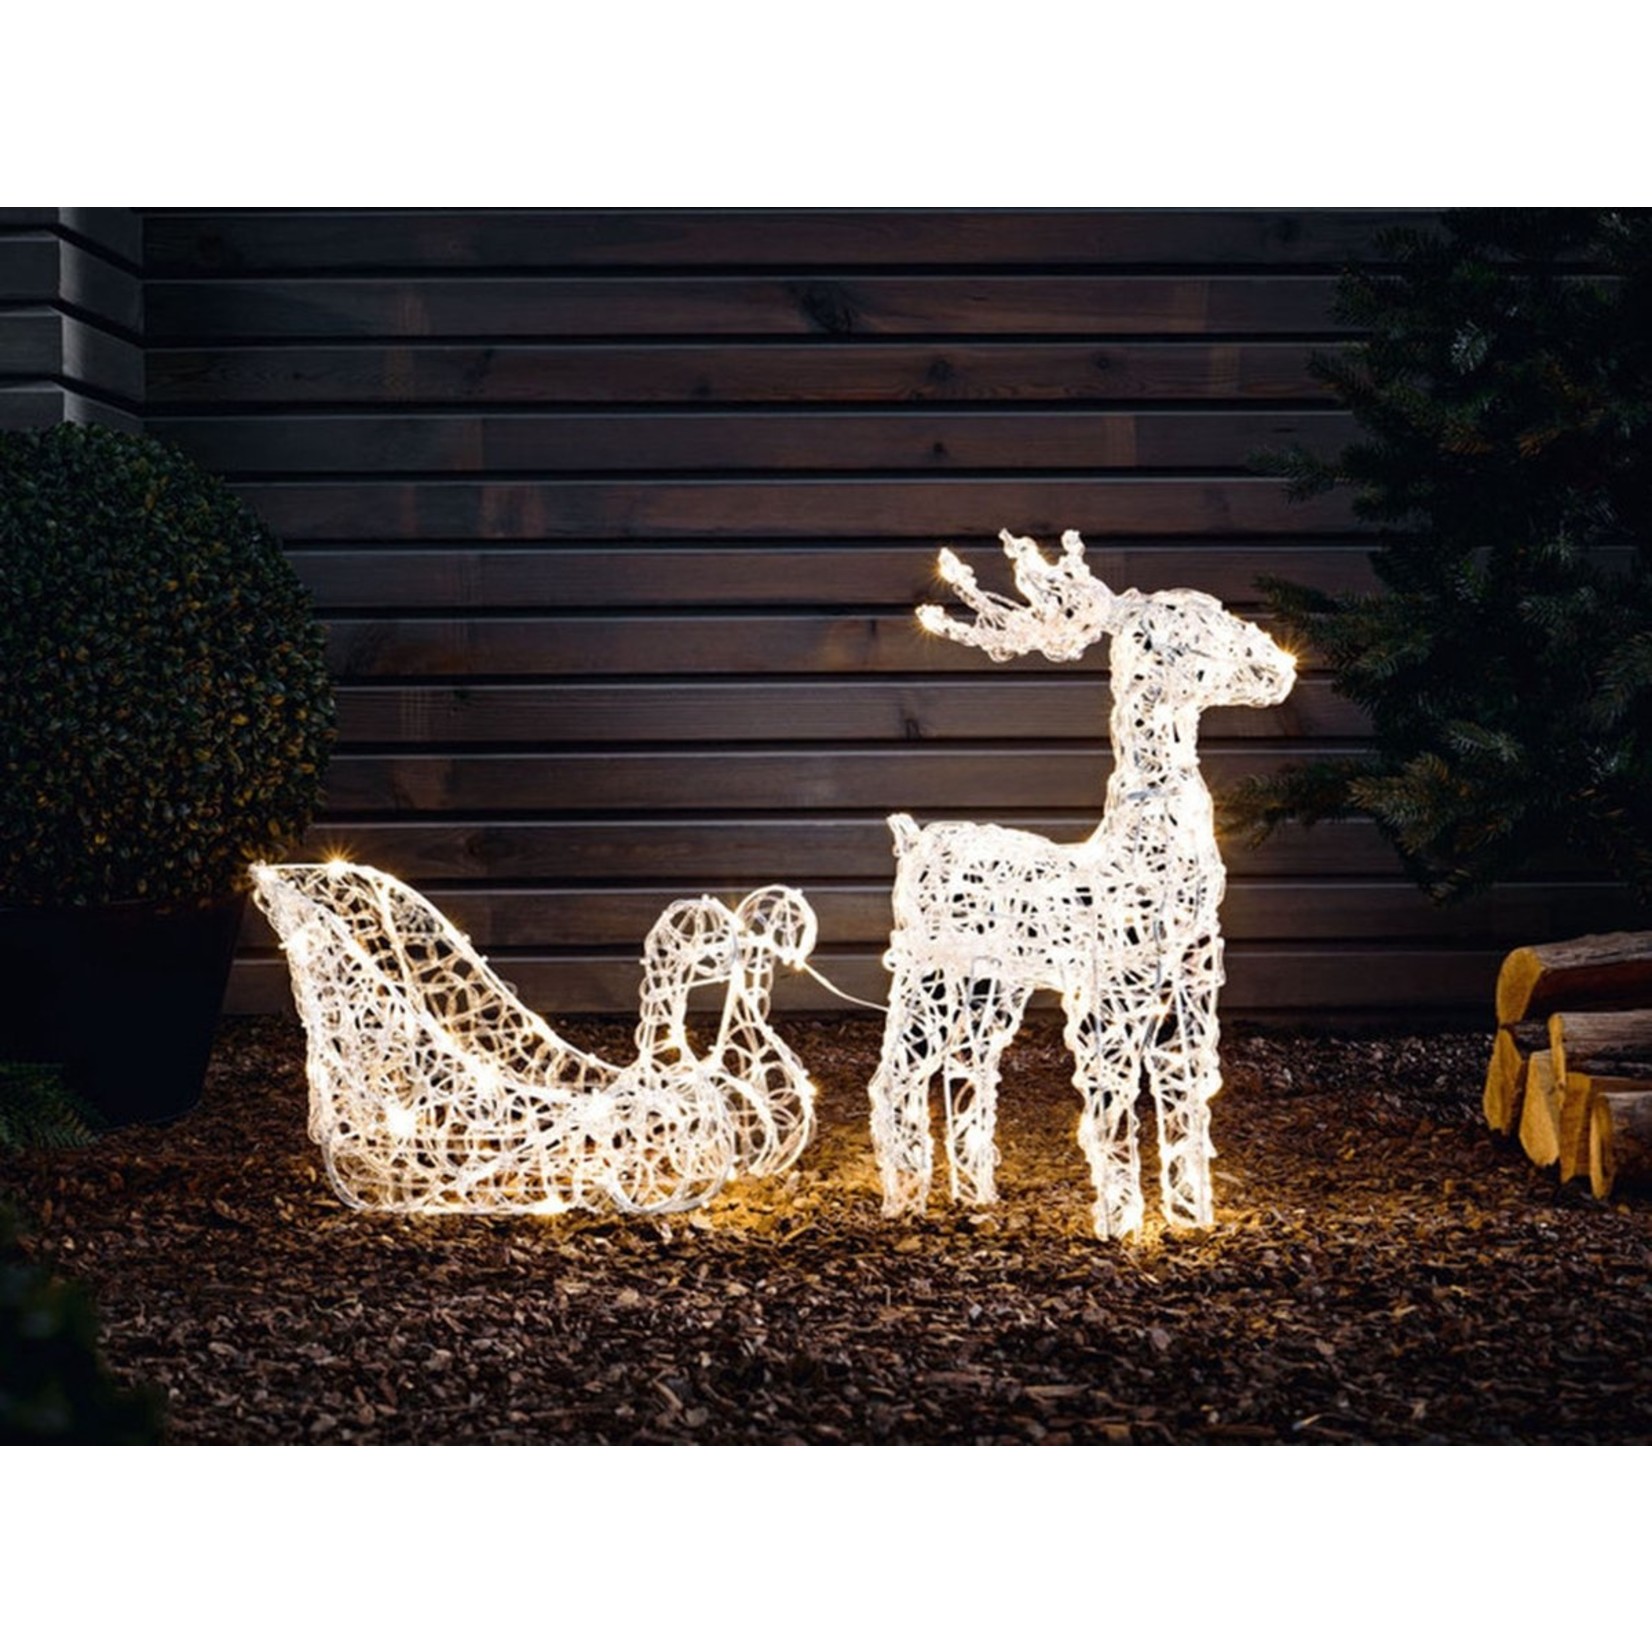 AG Store Kerstverlichting buiten en binnen - Rendier met Slee - 3D verlichte kerstfiguren - energiezuinig - 462 LED lichten - kerst -spatwaterdicht - timer - wit warmlicht - Slangverlichting